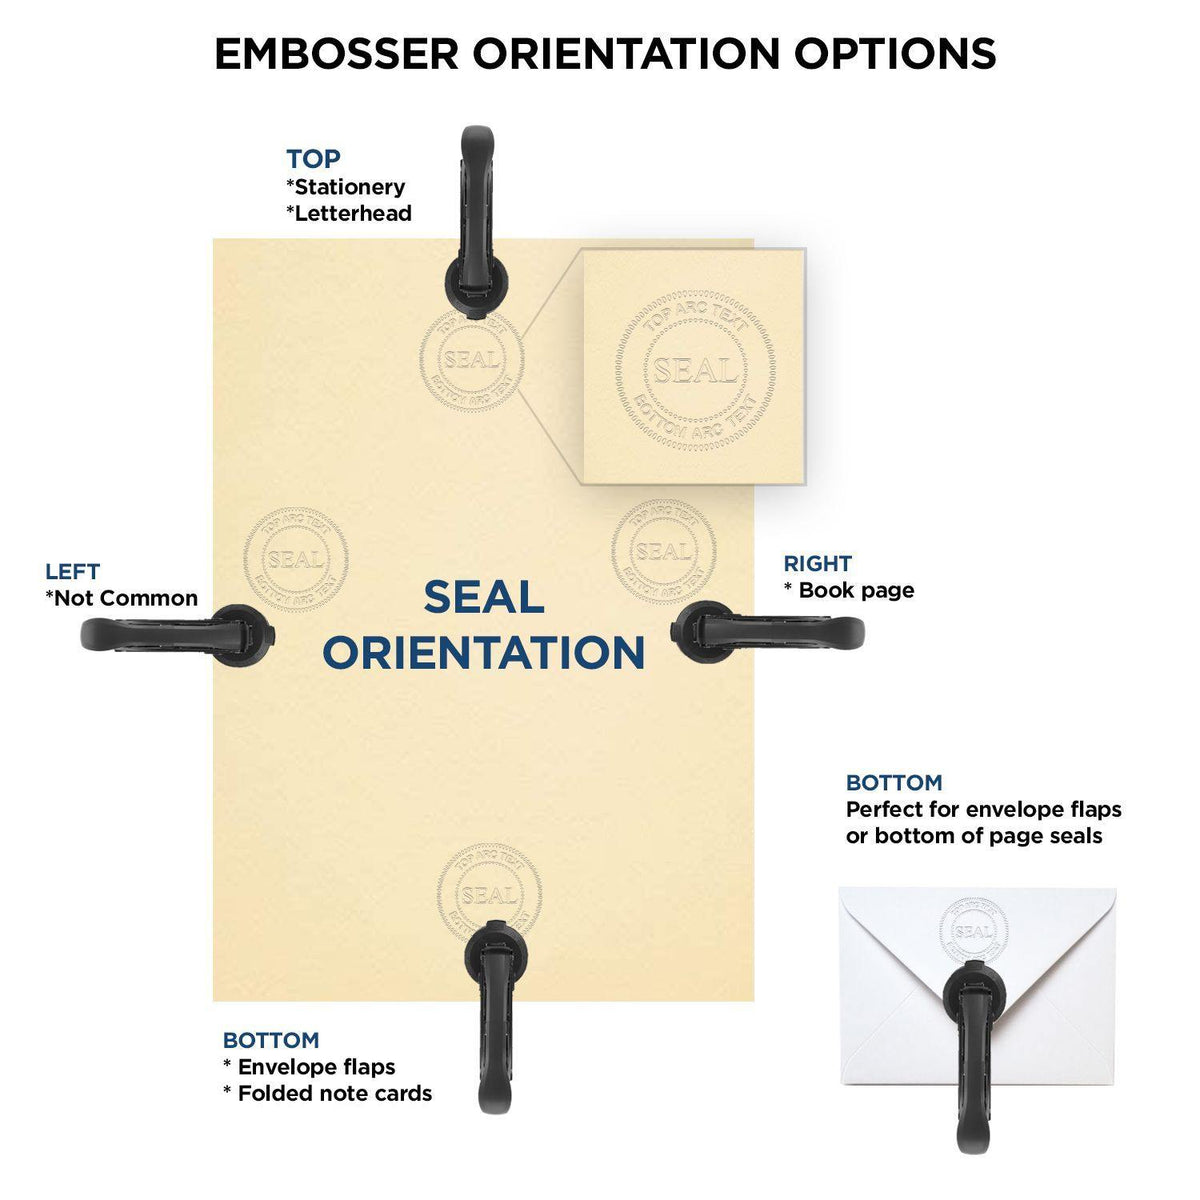 Real Estate Appraiser Extended Long Reach Desk Seal Embosser - Engineer Seal Stamps - Embosser Type_Desk, Embosser Type_Extended Long Reach, Type of Use_Professional, Use_Heavy Duty, validate-product-description